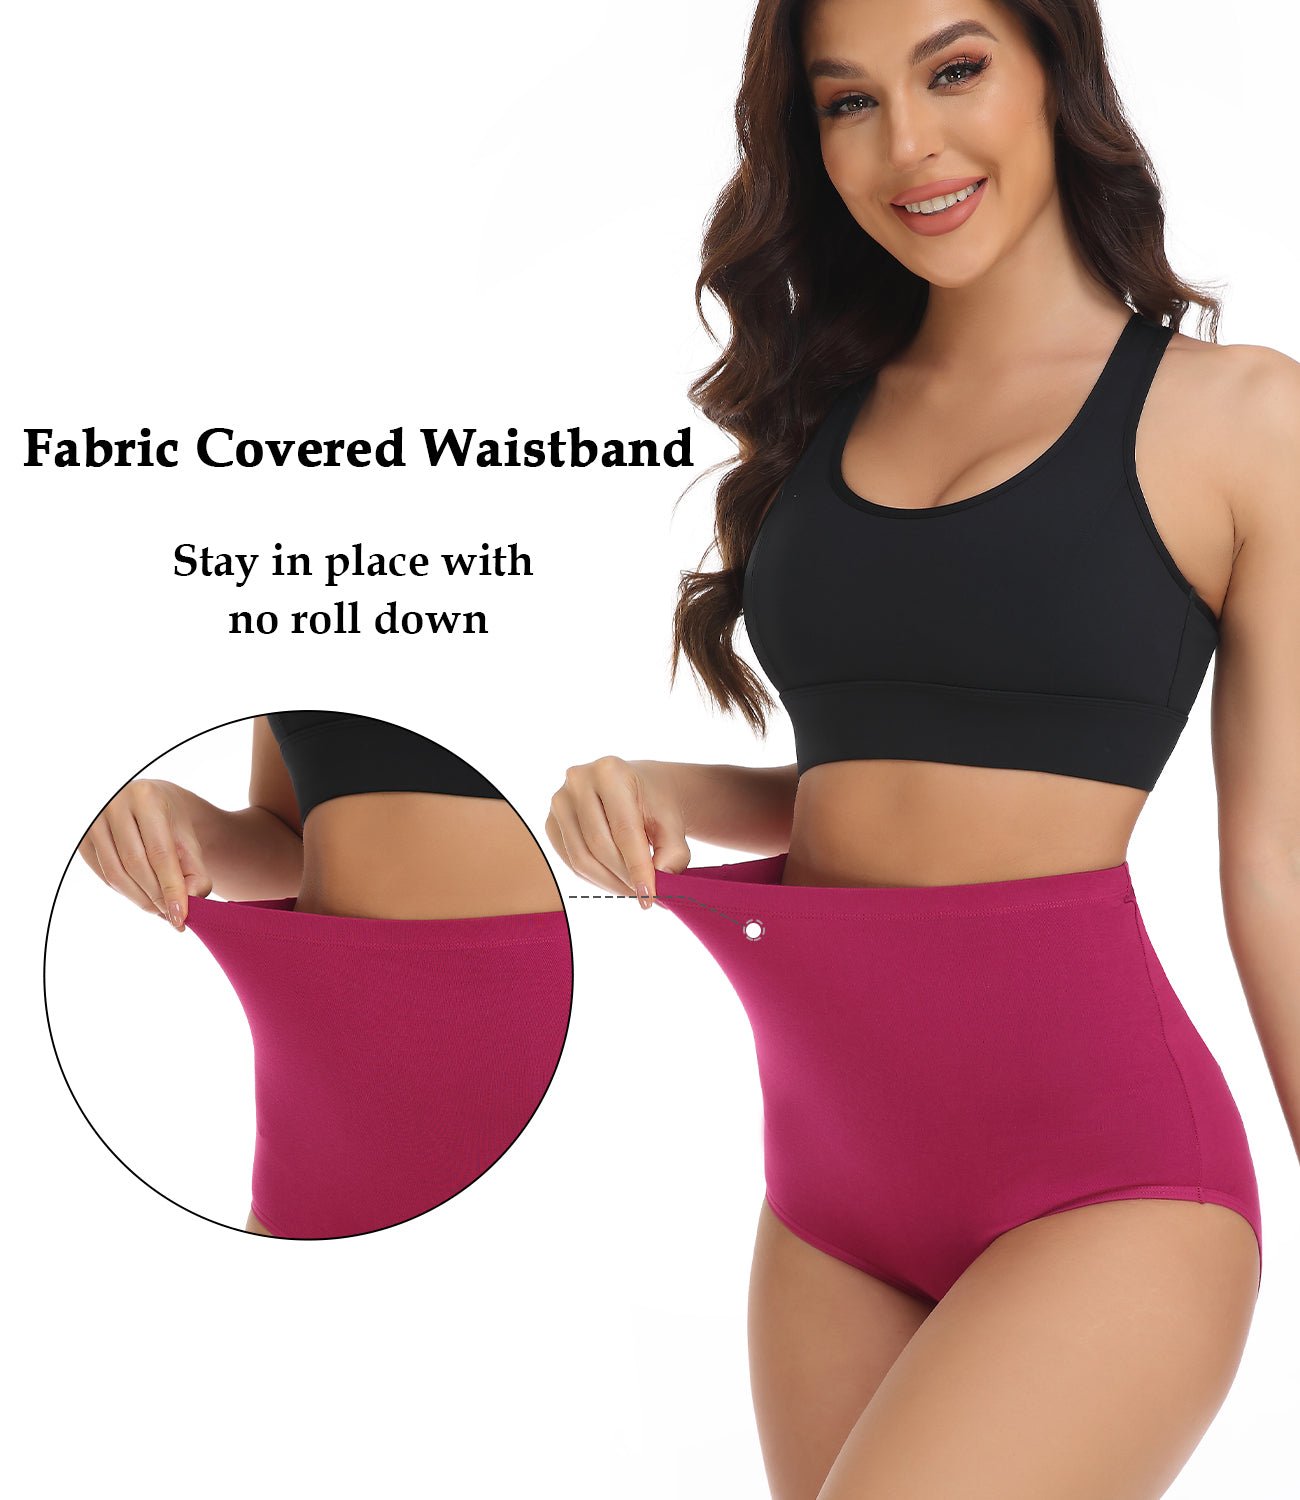 wirarpa Women's Underwear Cotton Super High Waisted Briefs Stretch Full Coverage Panties 4 Pack - Wirarpa Apparel, Inc.